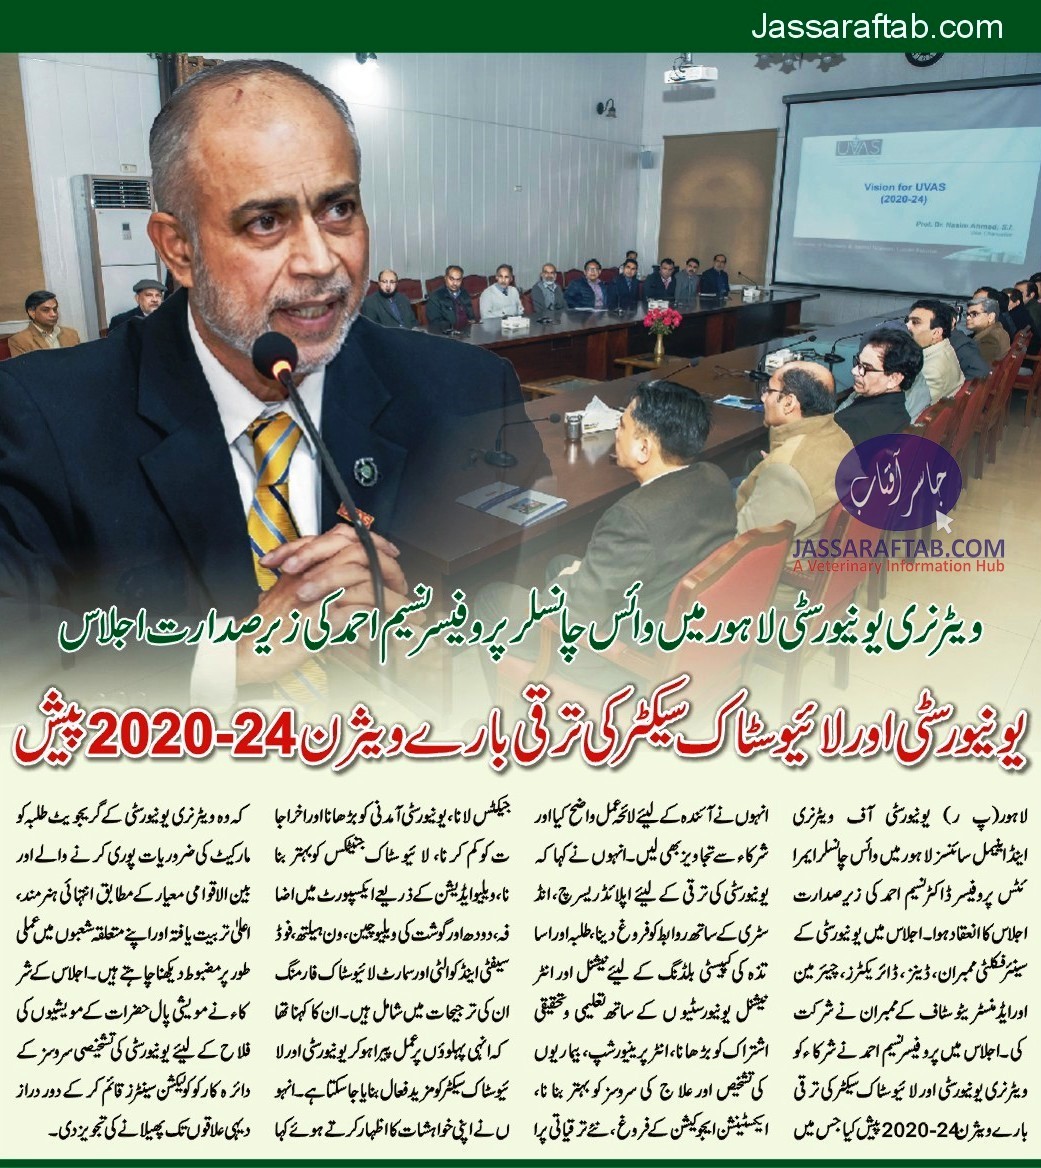 Prof Nasim Ahmad presented the UVAS vision